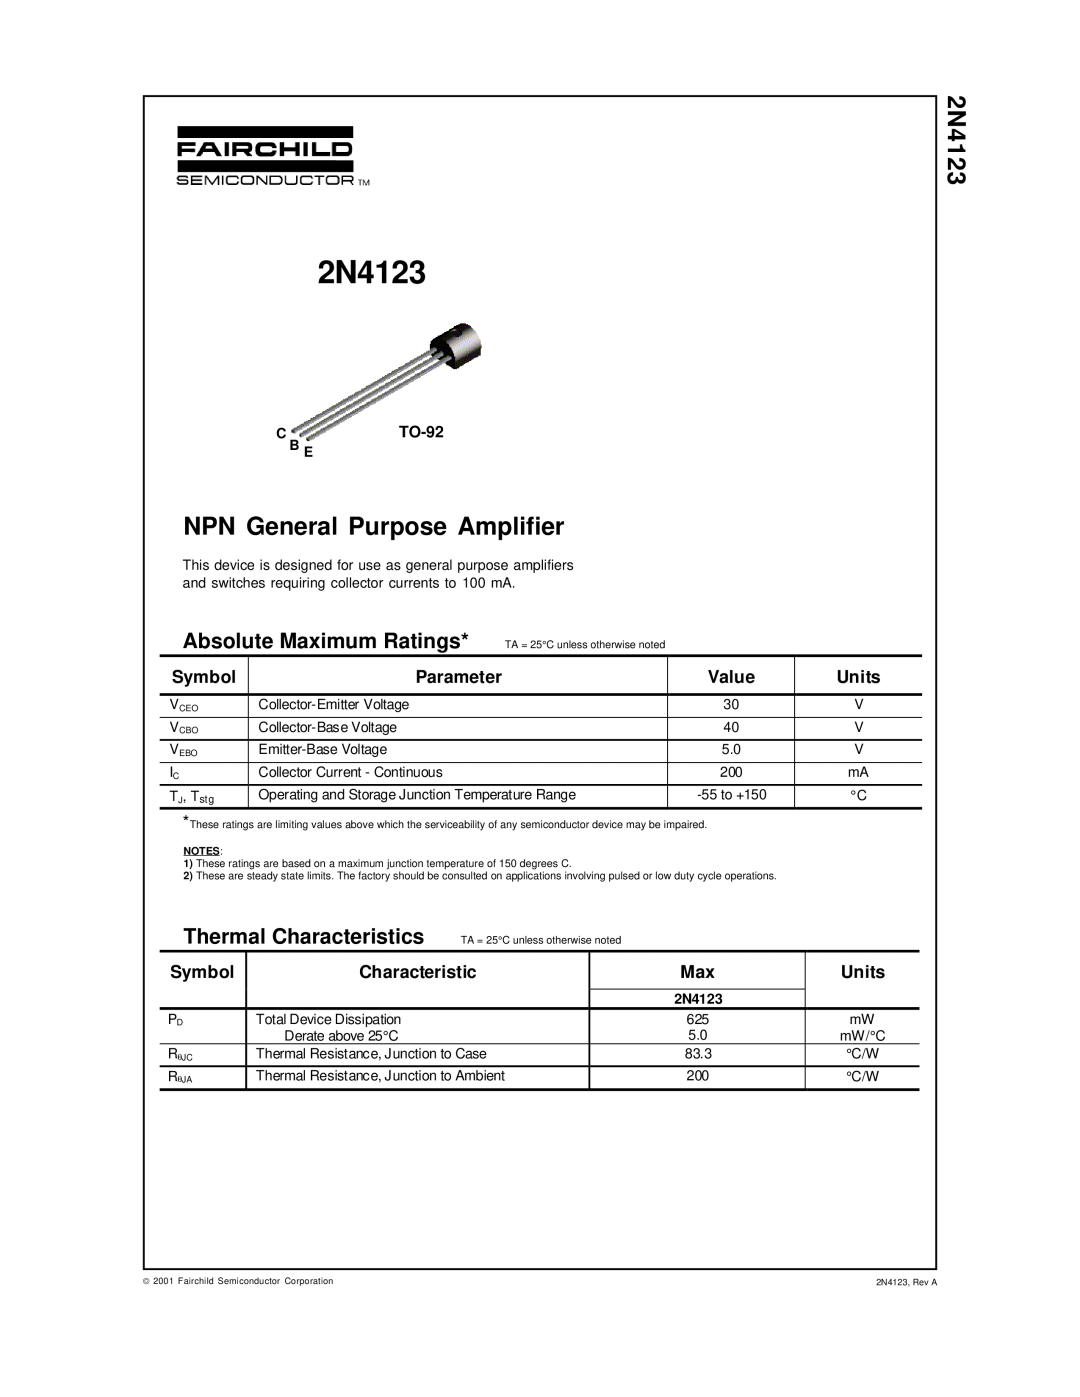 Fairchild 2N4123 manual NPN General Purpose Amplifier, Absolute Maximum Ratings, Thermal Characteristics, Symbol, Units 